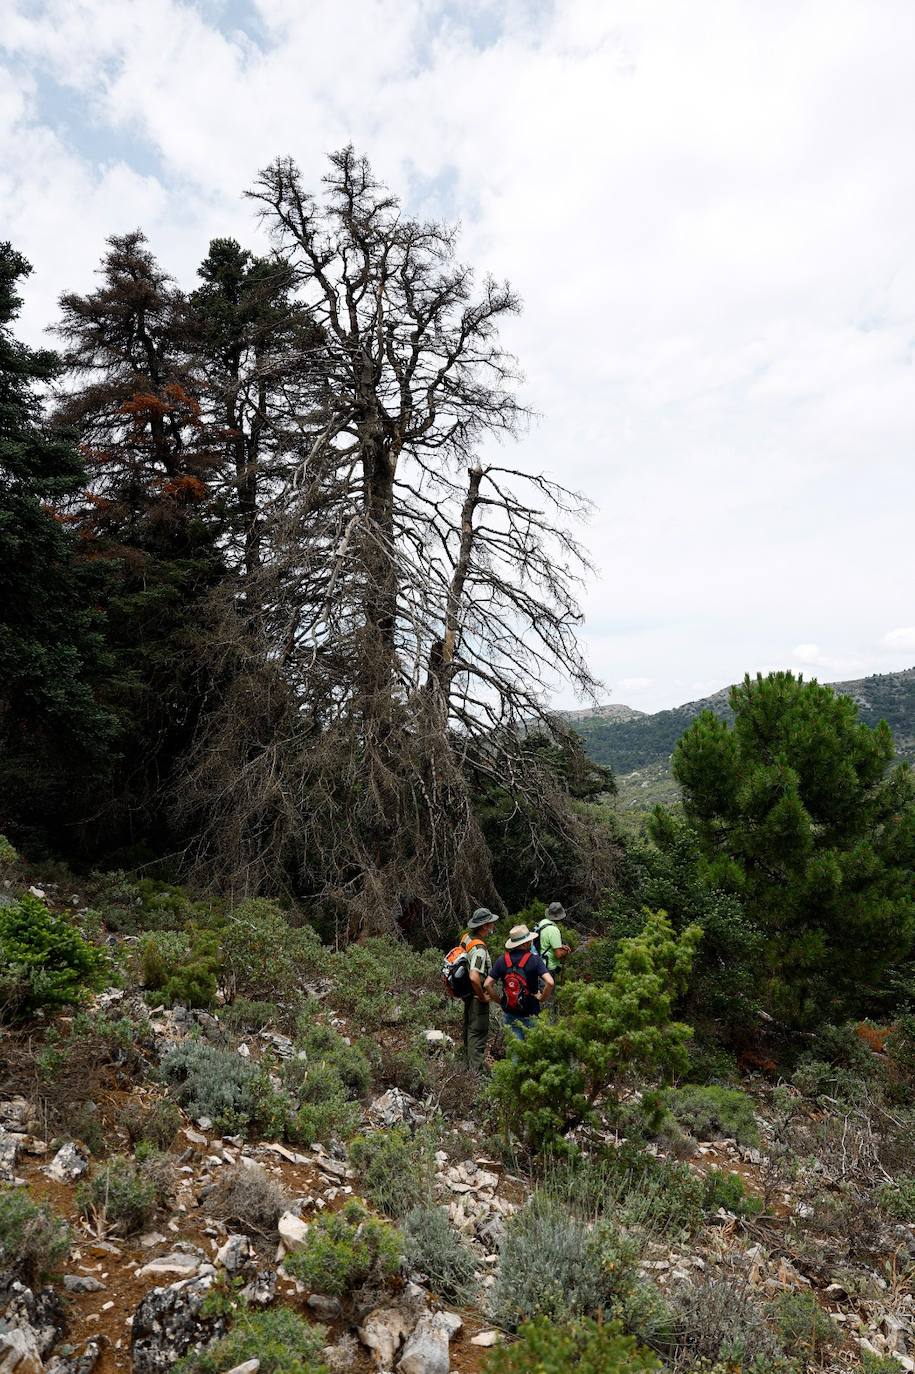 Drought and survival in the Sierra de las Nieves